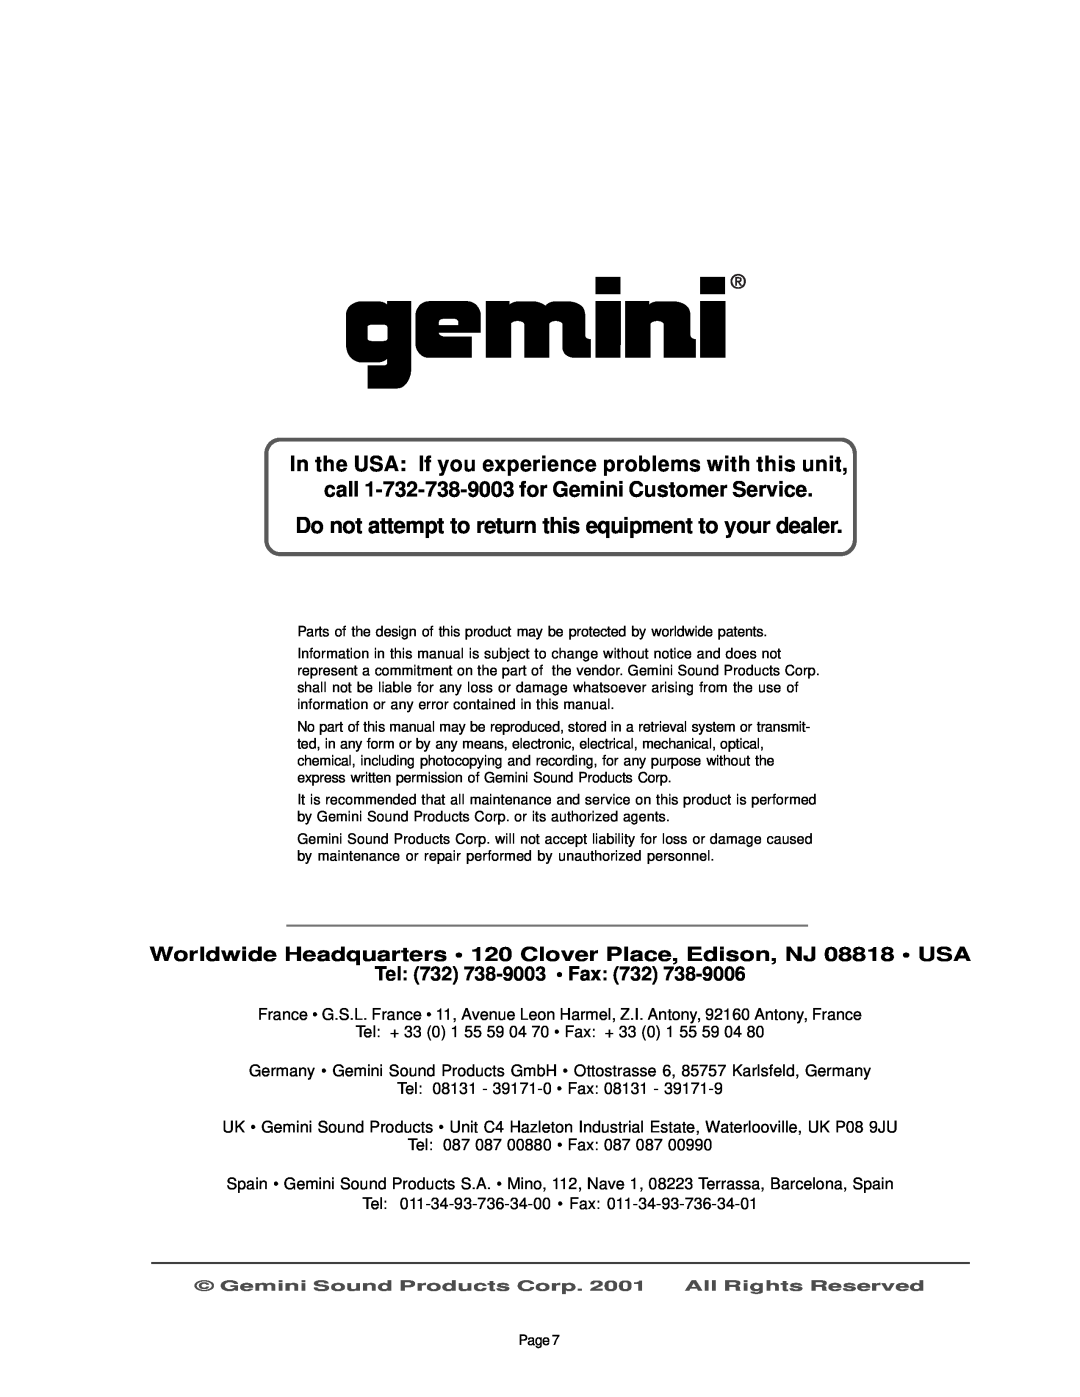 Gemini PT-2000 instruction manual call 1-732-738-9003for Gemini Customer Service, Tel 732 738-9003 Fax 